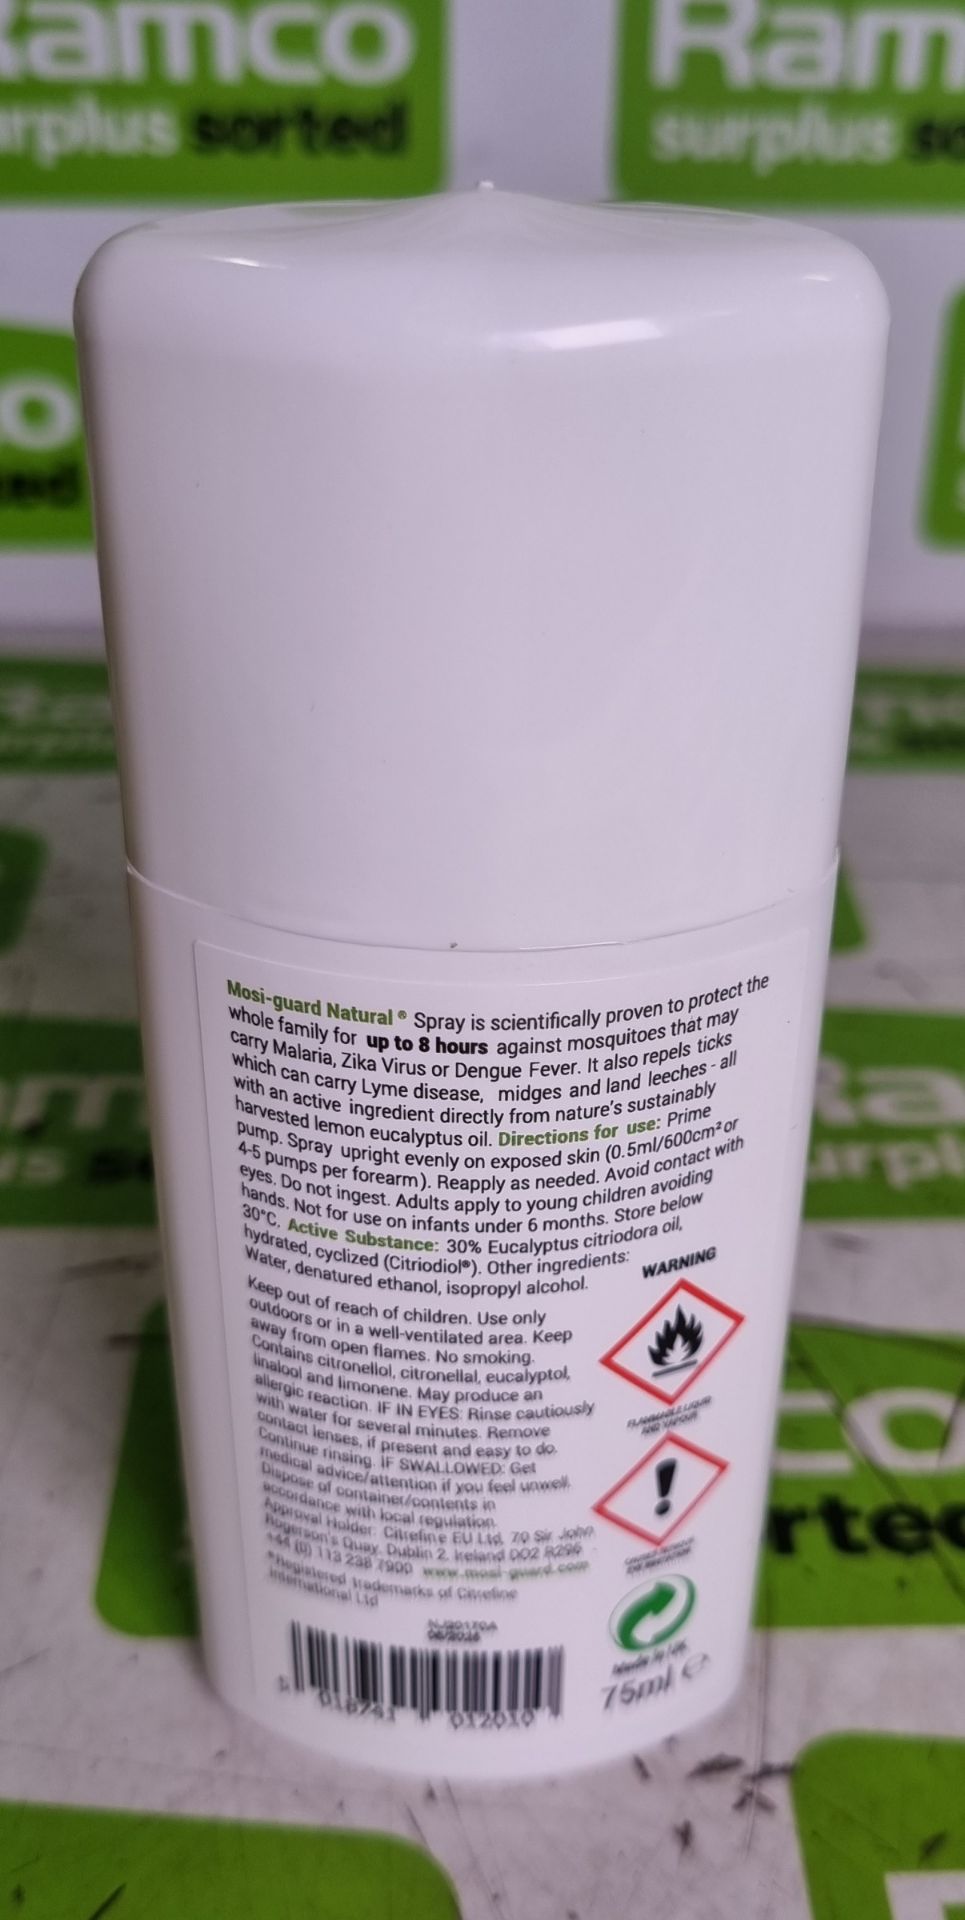 32x boxes of Mosi-Guard Natural Spray - 6x 75ml bottles per box - Image 5 of 5